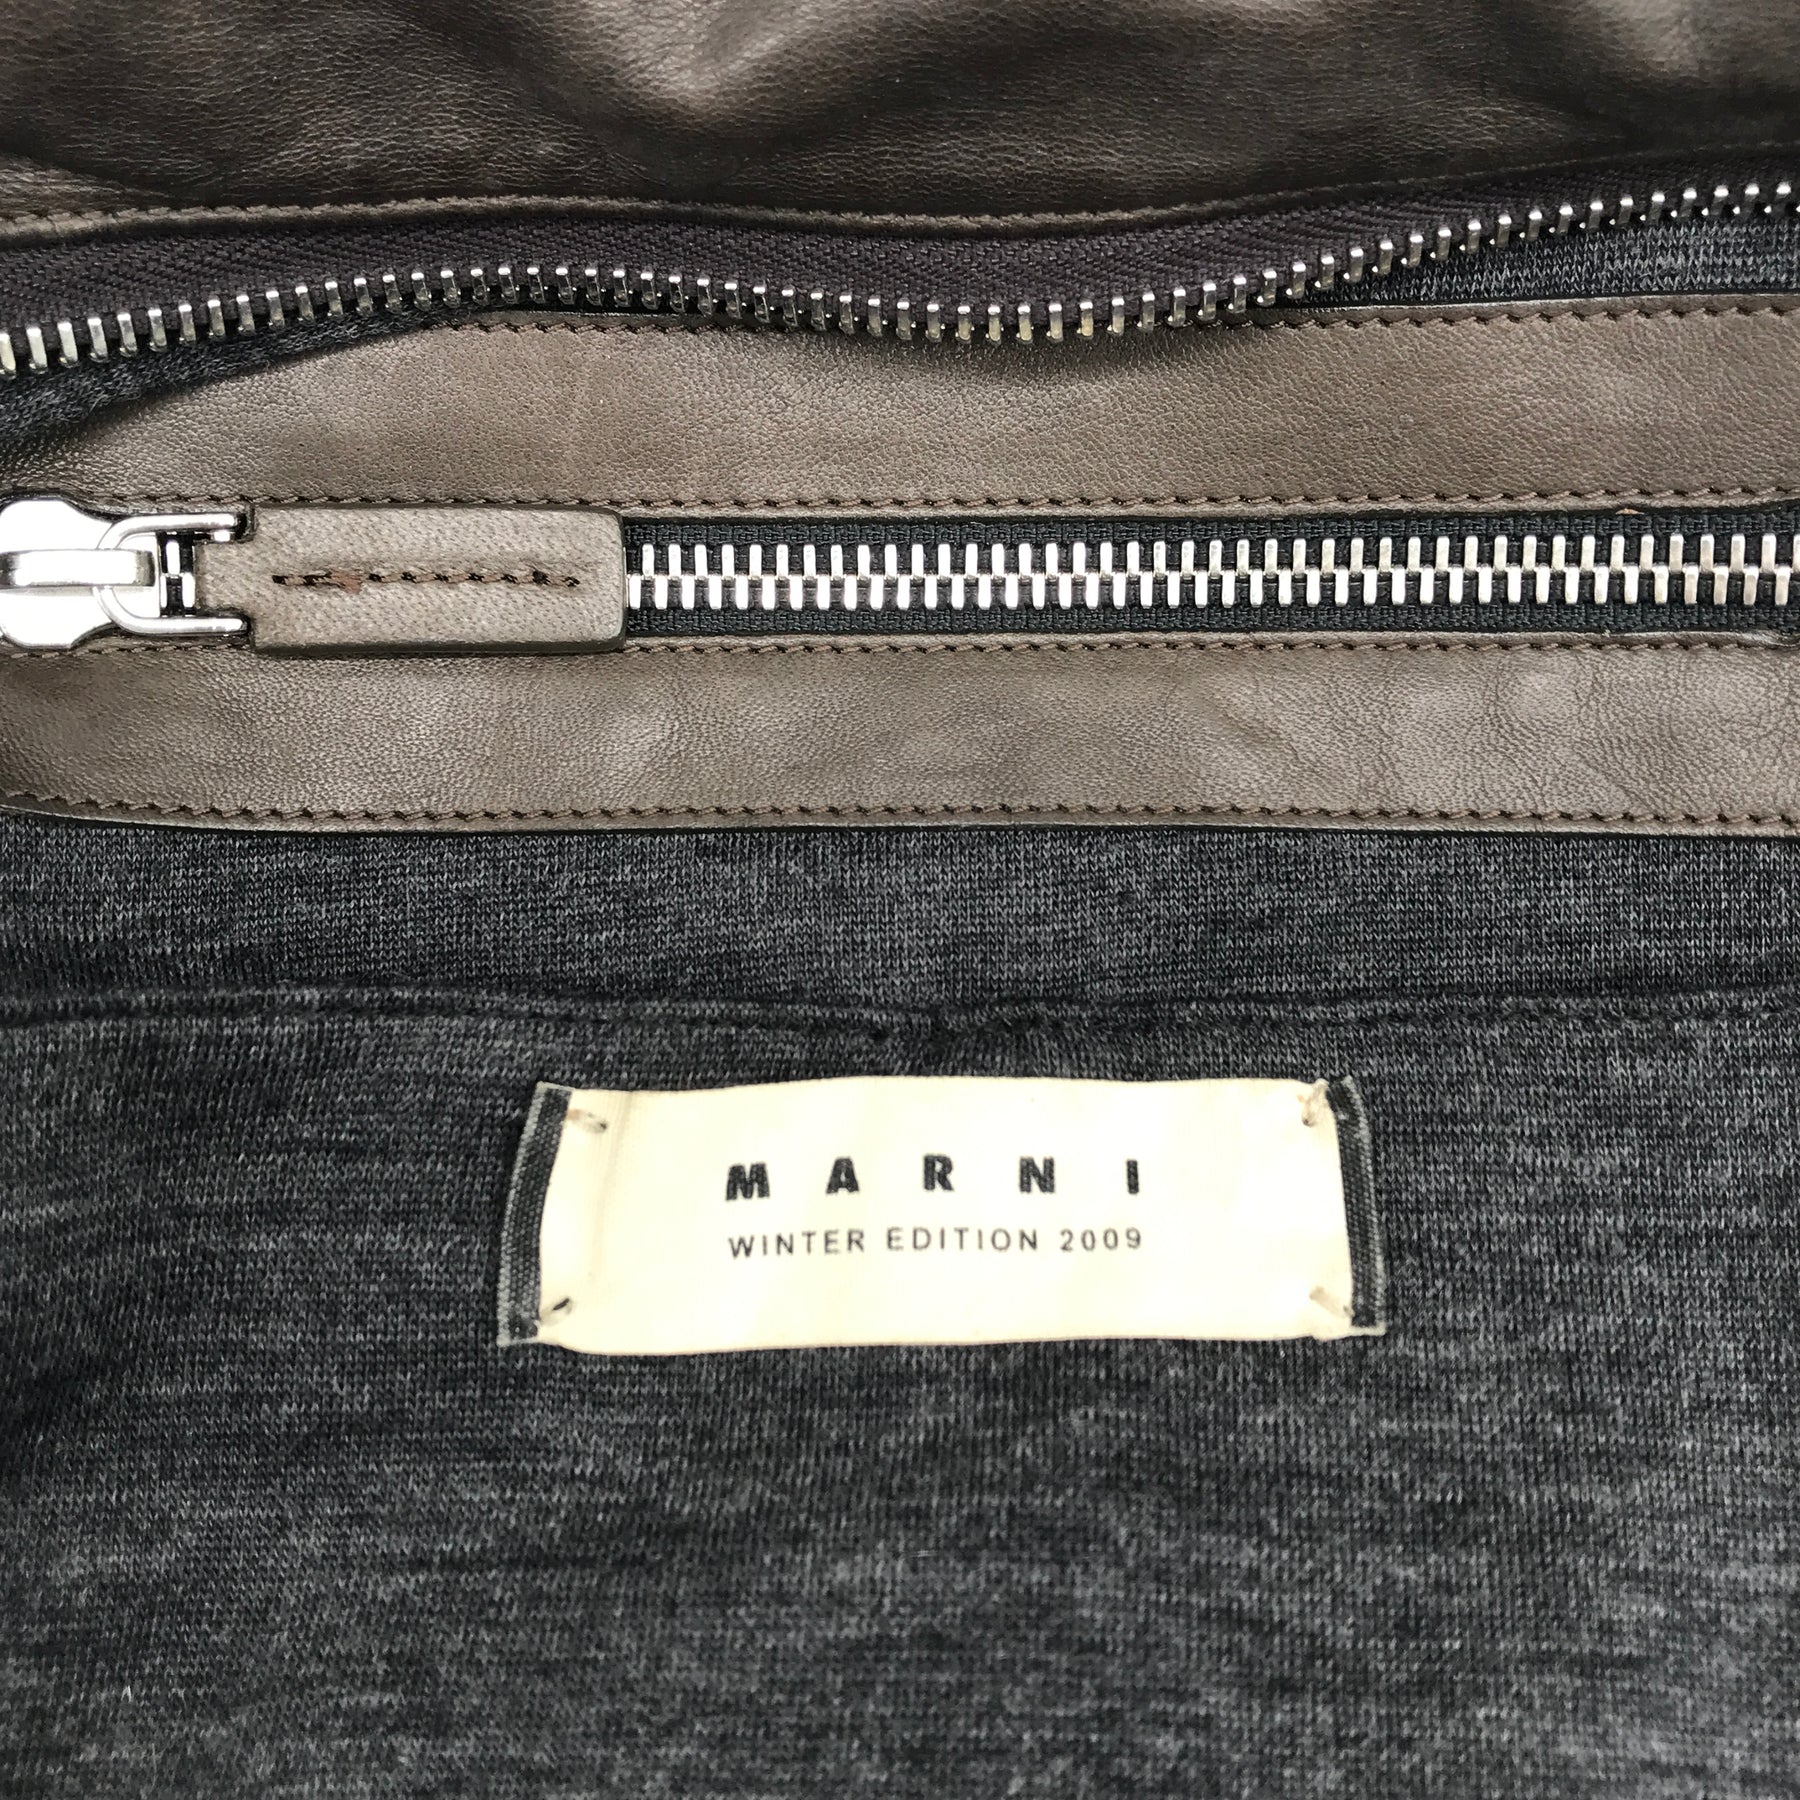 Marni S/S18 Caddy Bag - BAGAHOLICBOY